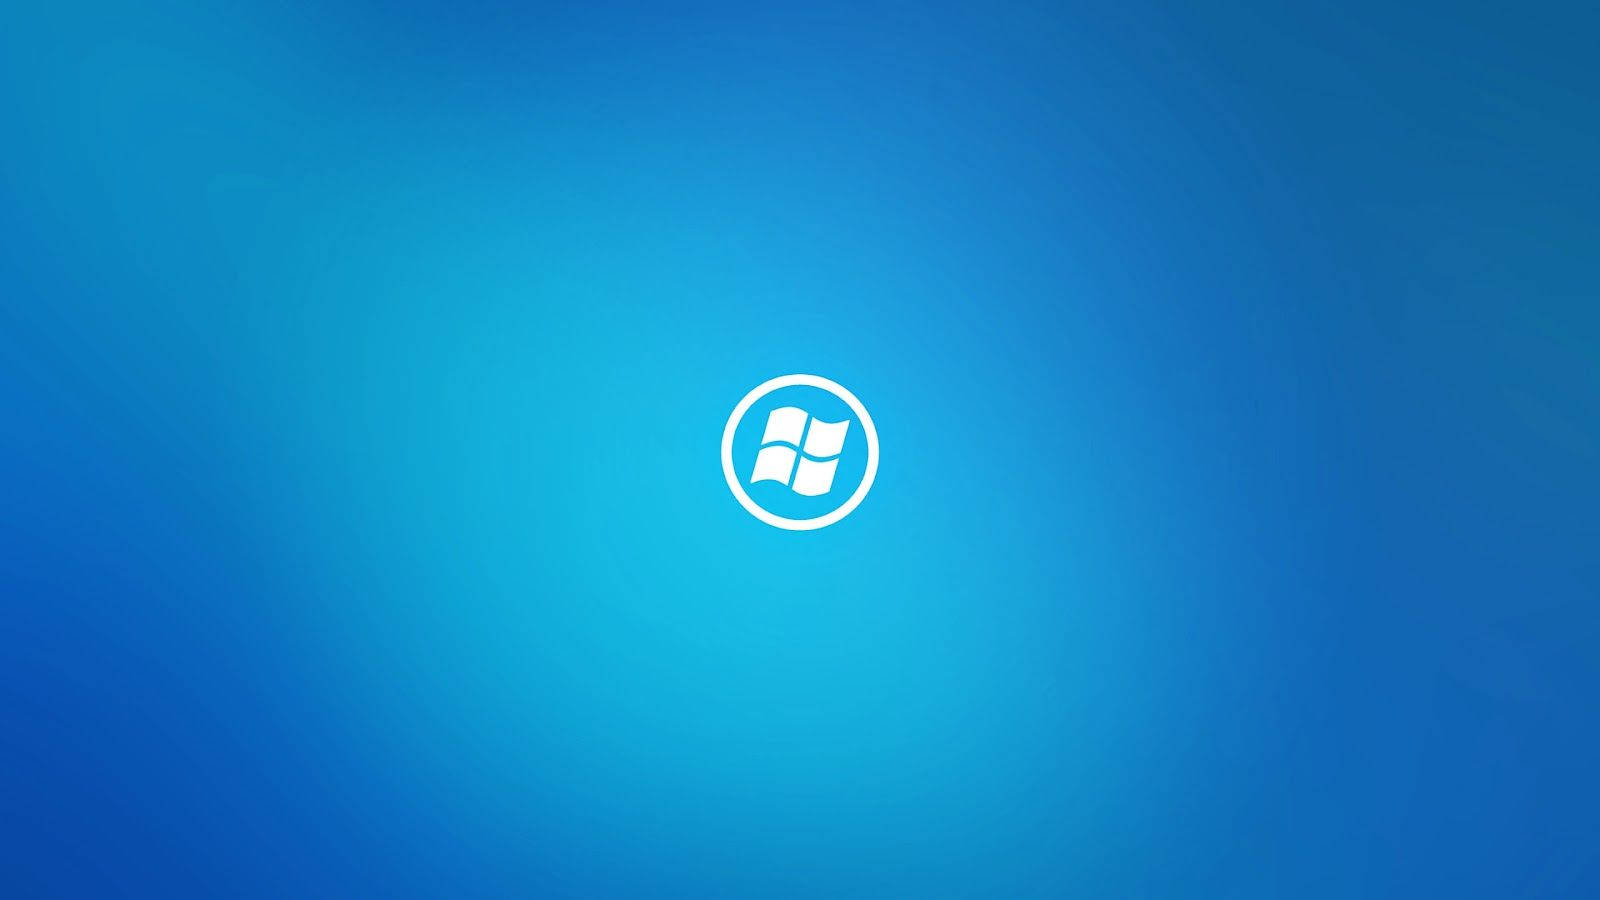 Windows 10 Hd Circle Logo Wallpaper